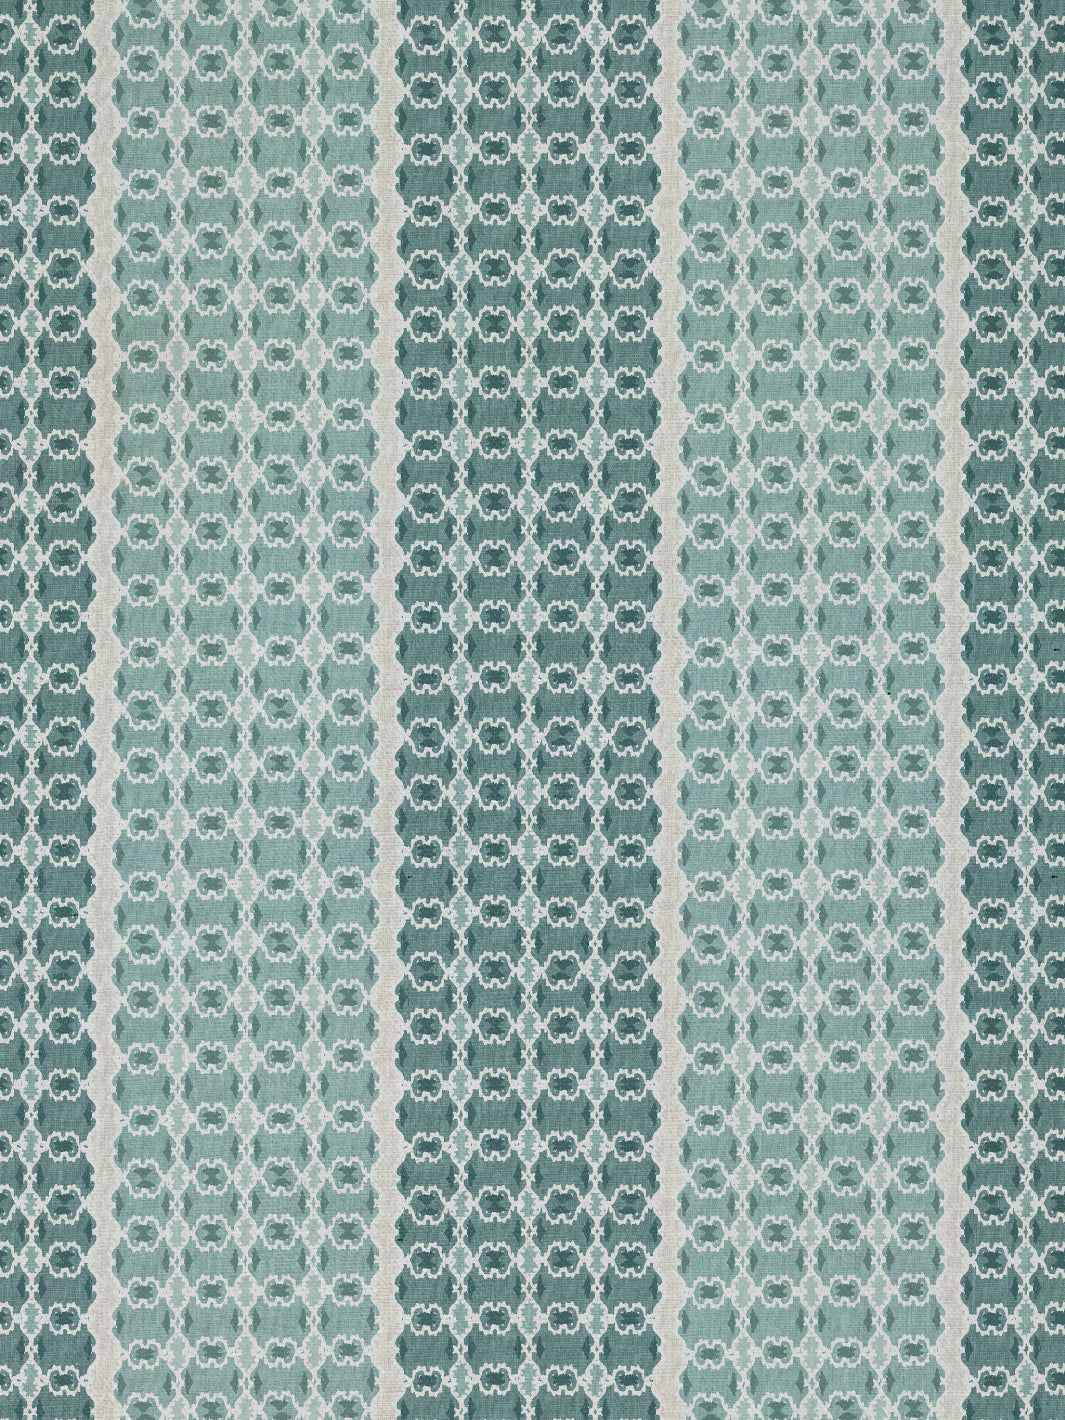 'Medallion Stripe' Linen Fabric by Nathan Turner - Seafoam